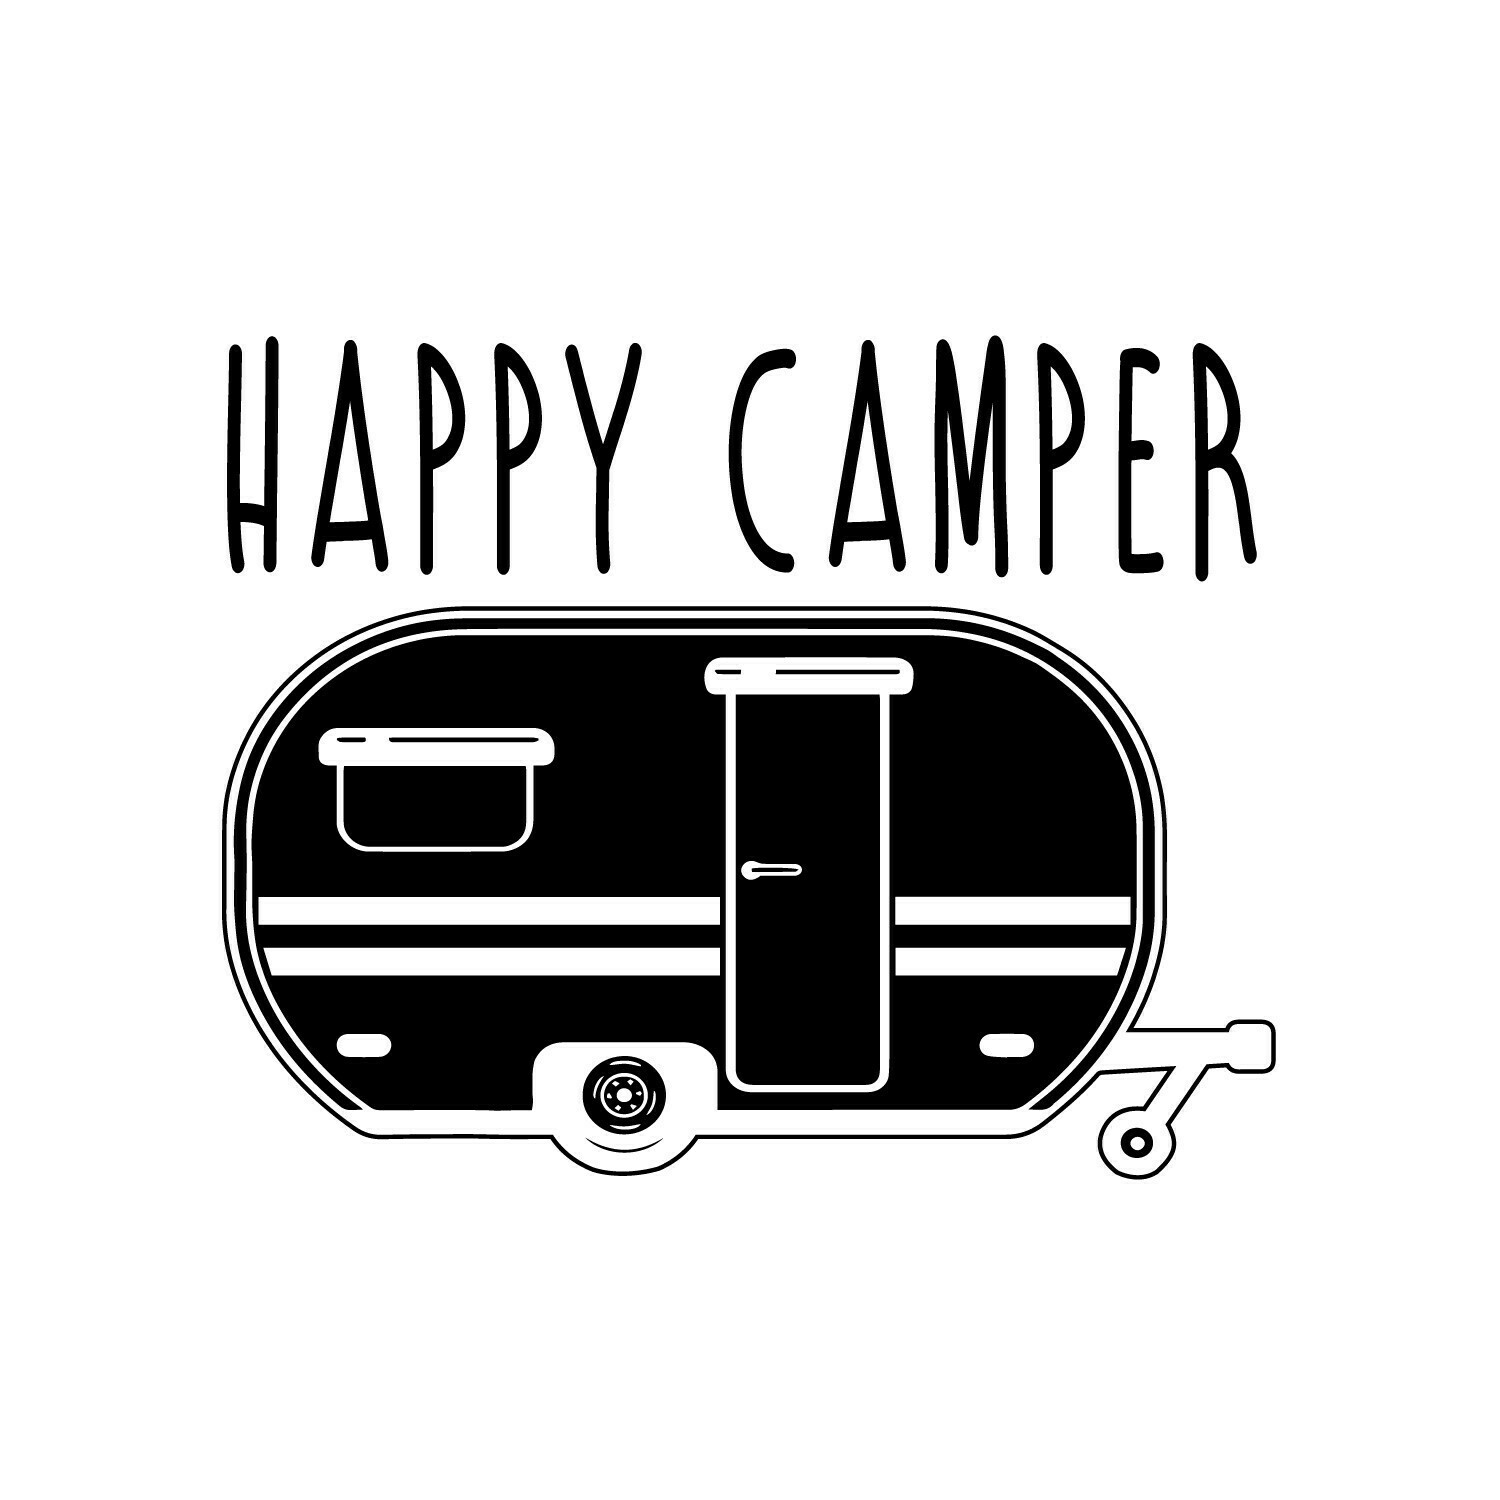 Happy Camper RV Insulated Tumbler 30 oz